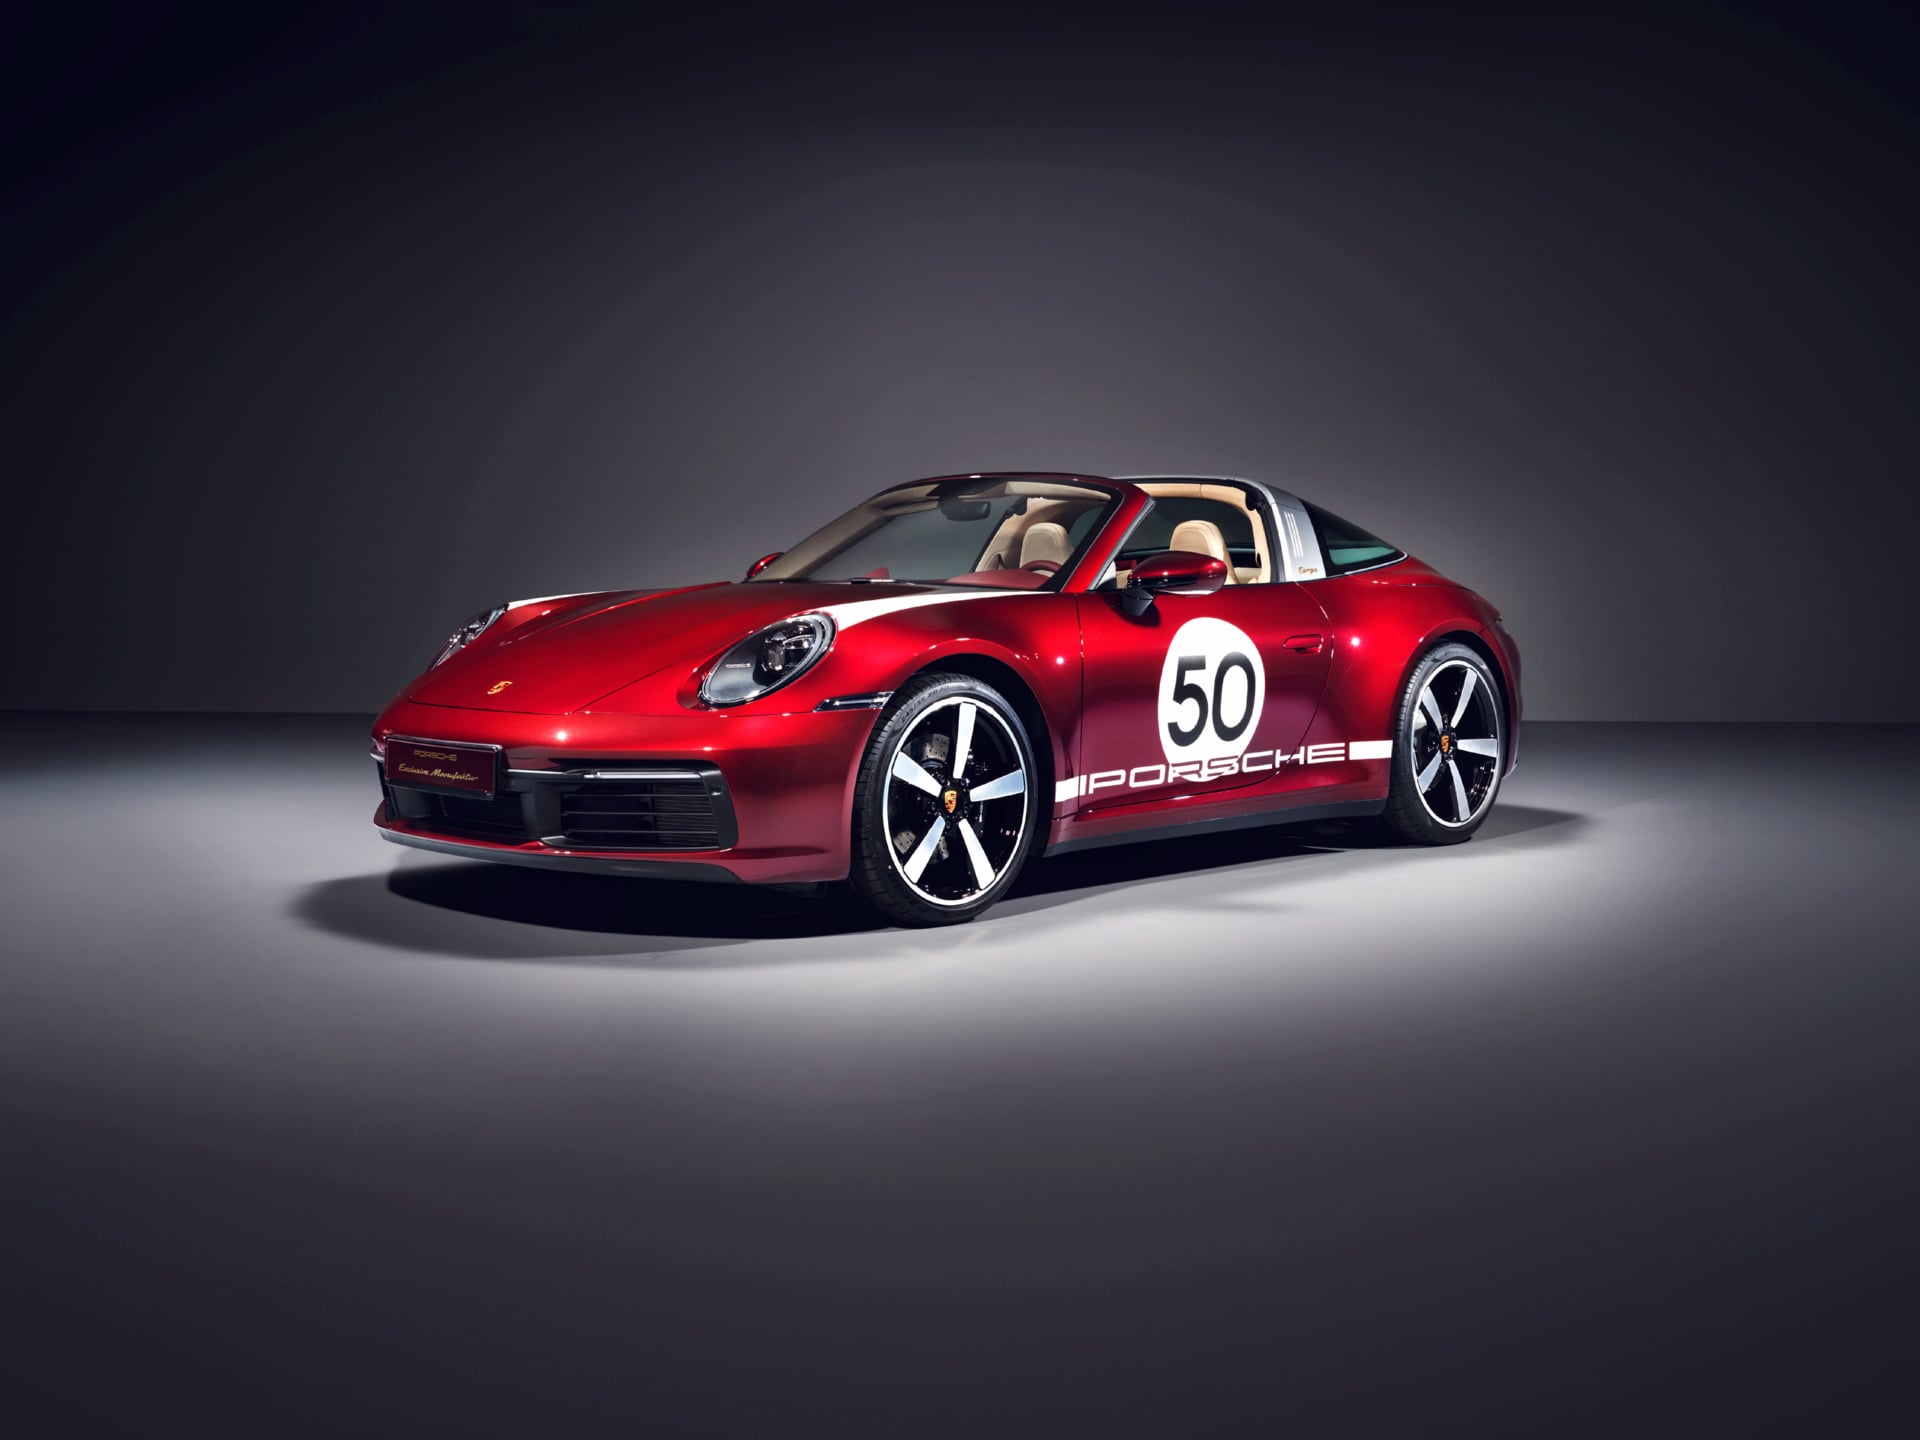 Porsche 911 Targa 4S at 1280 x 960 size wallpapers HD quality